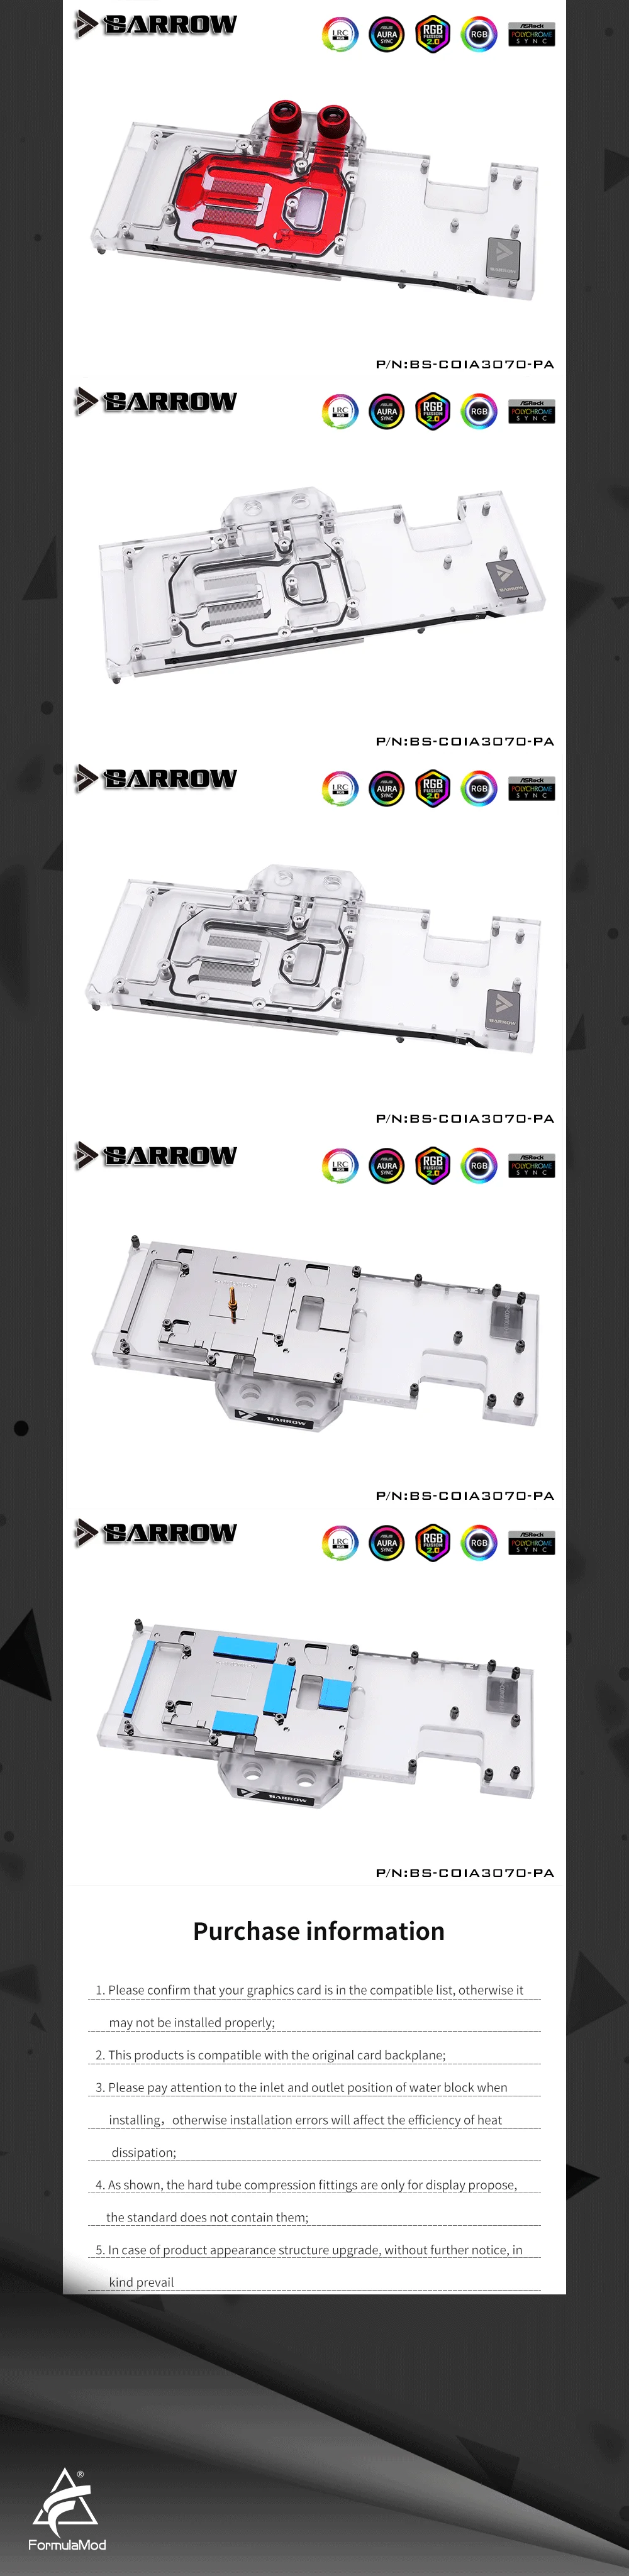 Barrow 3070 GPU Water Block for Colorful RTX 3070 Advanced OC, Full Cover 5v ARGB GPU Cooler, BS-COIA3070-PA  